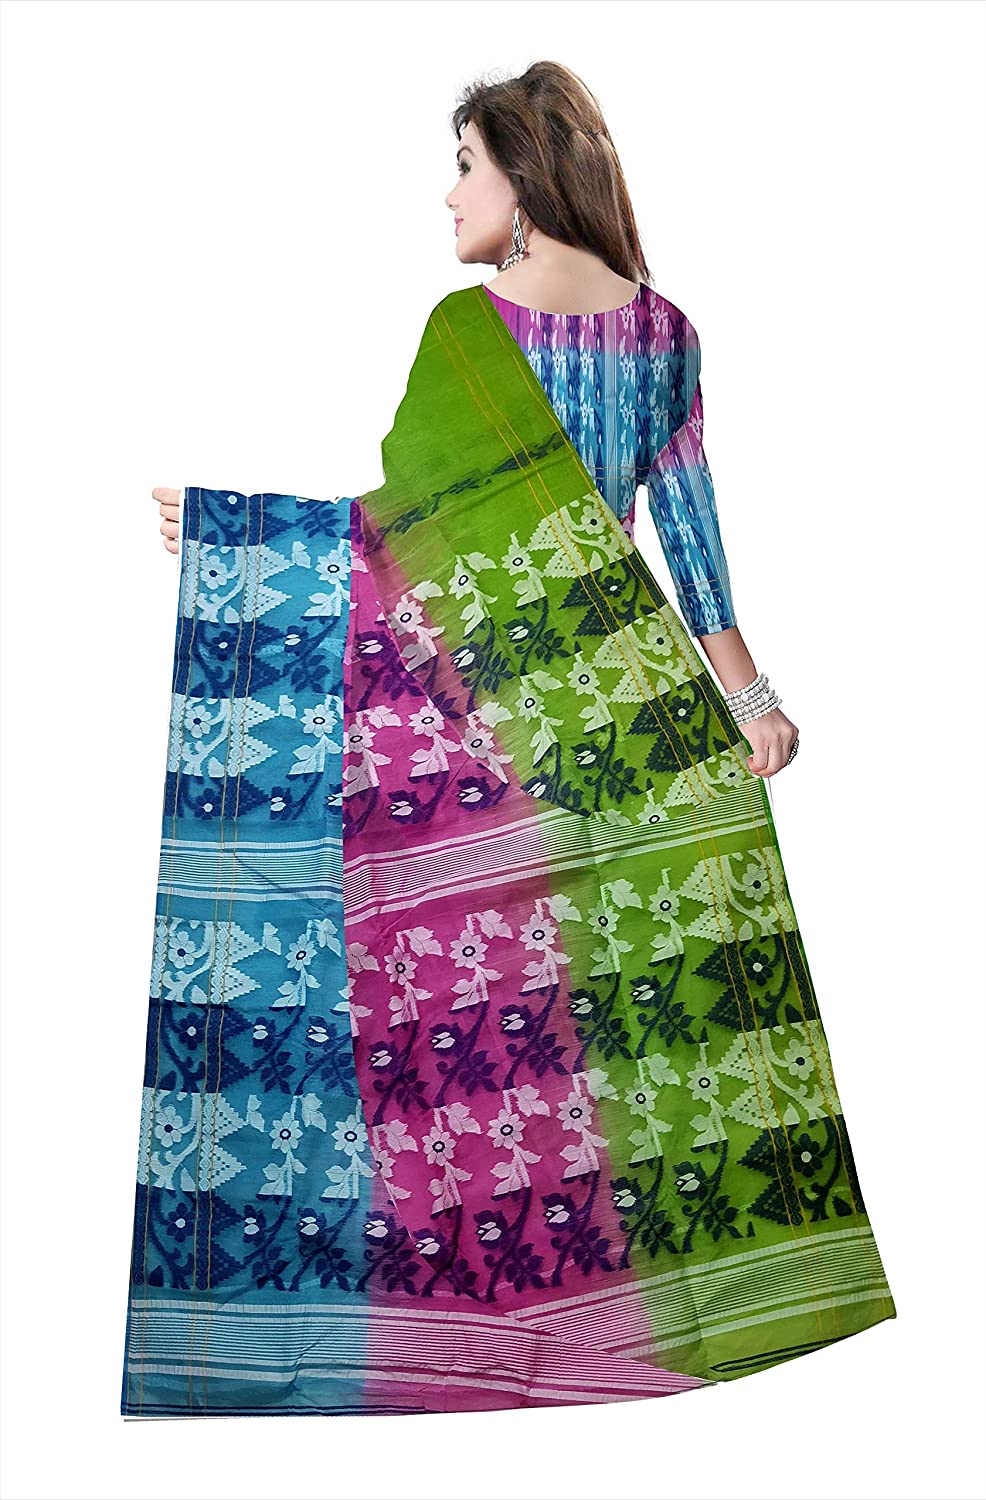 Pradip Fabrics Ethnic Women's Cotton Tant Gap Jamdani Green,Pink, and Aqua Color Saree